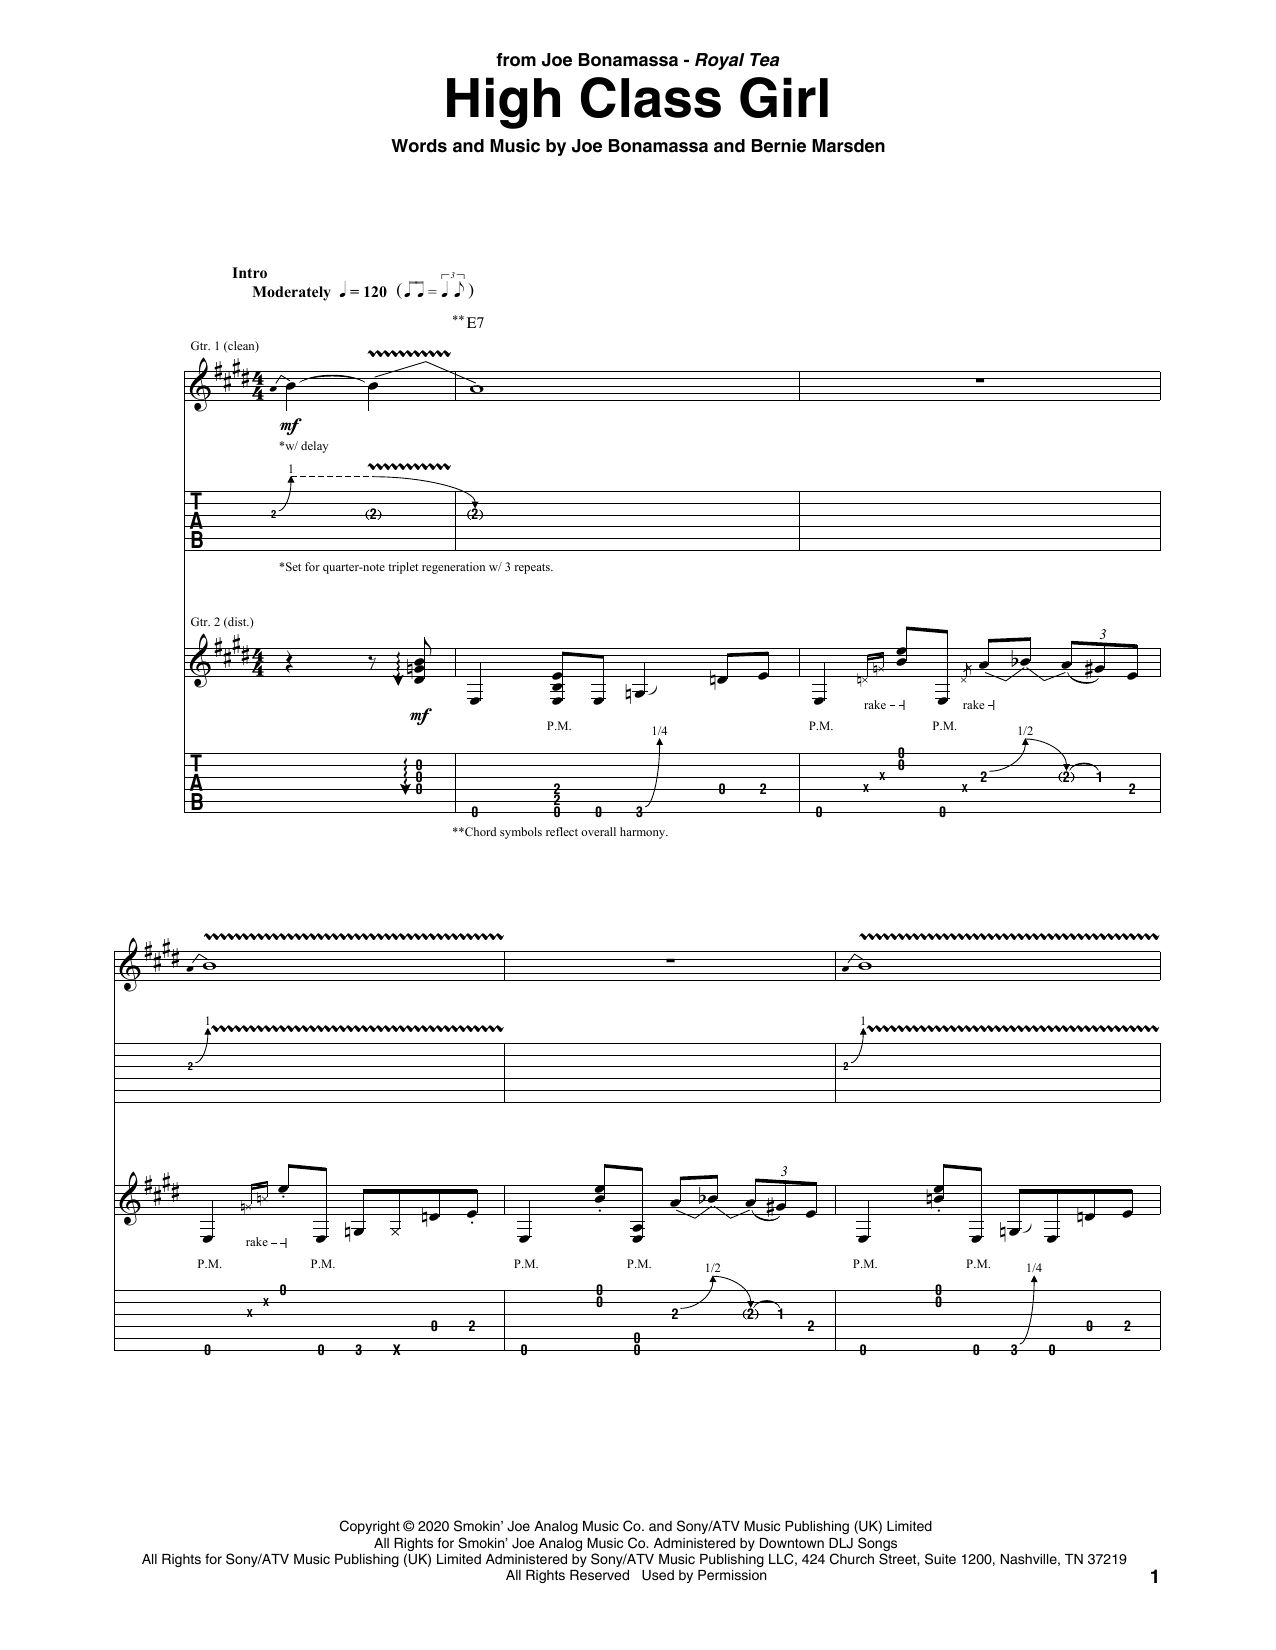 Download Joe Bonamassa High Class Girl Sheet Music and learn how to play Guitar Tab PDF digital score in minutes